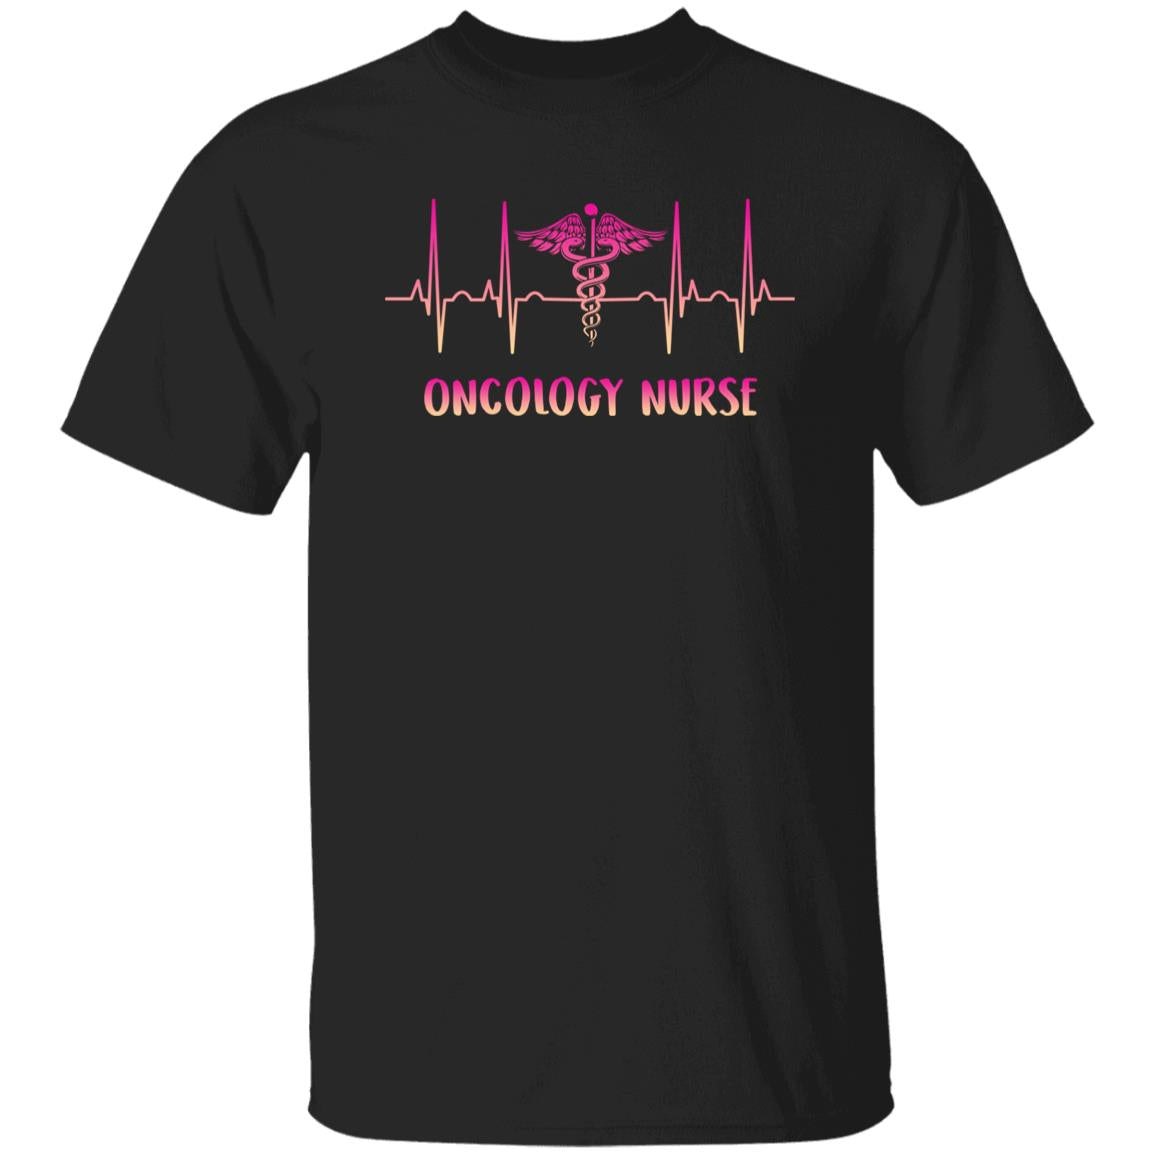 Oncology nurse Heartbeat T-Shirt Infusion chemo nurse heart beat Unisex Tee Black Navy Dark Heather-Family-Gift-Planet